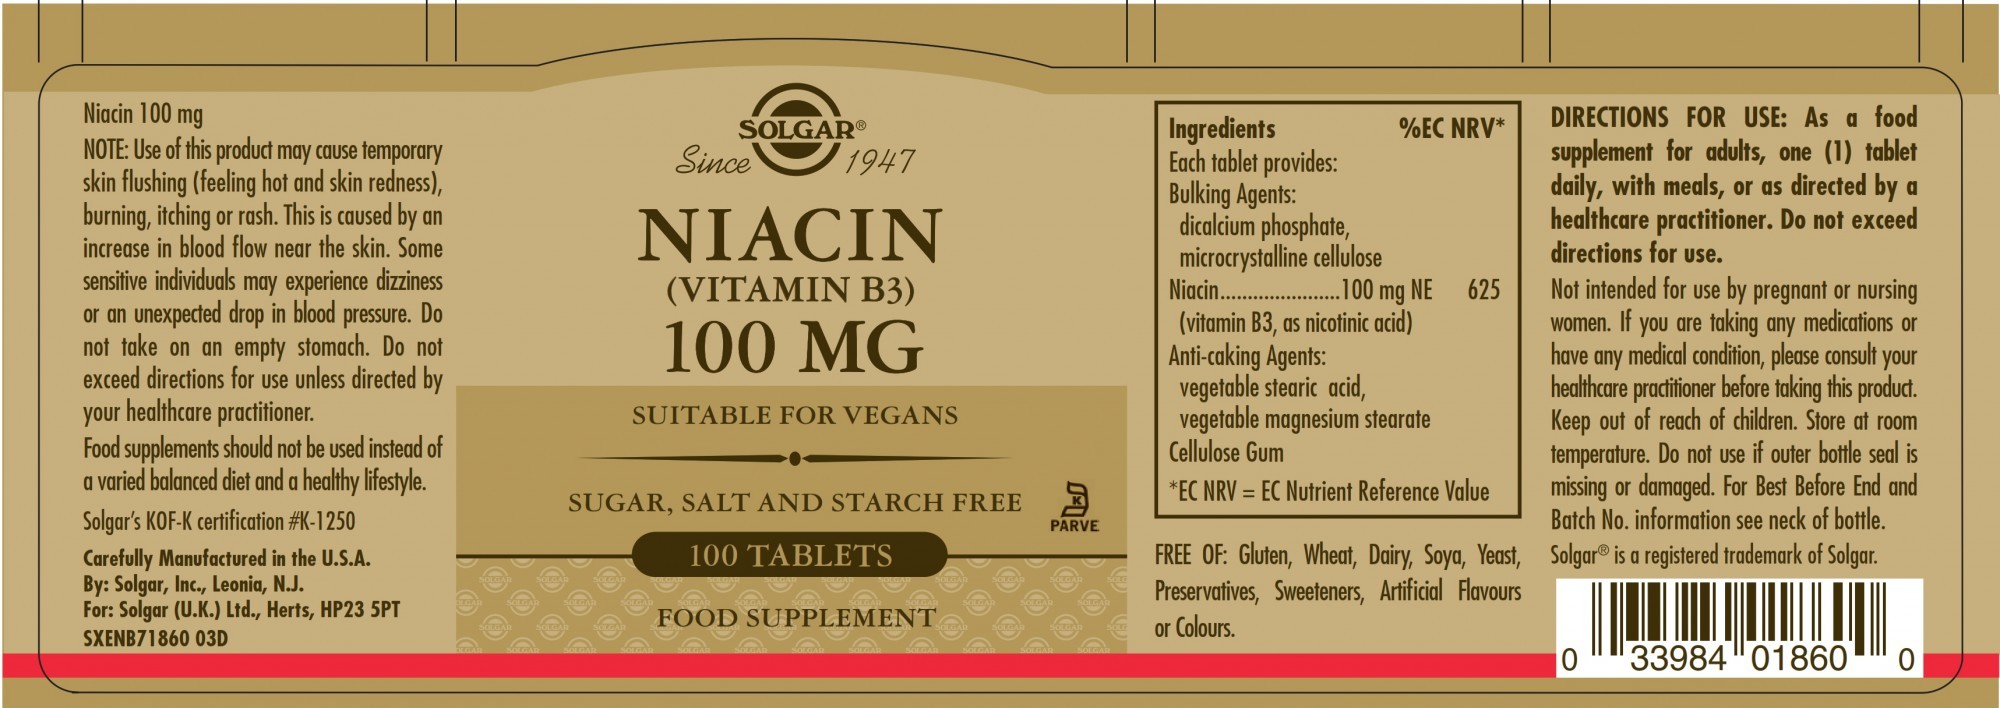 Solgar Niacin (Vitamin B3) 100 MG